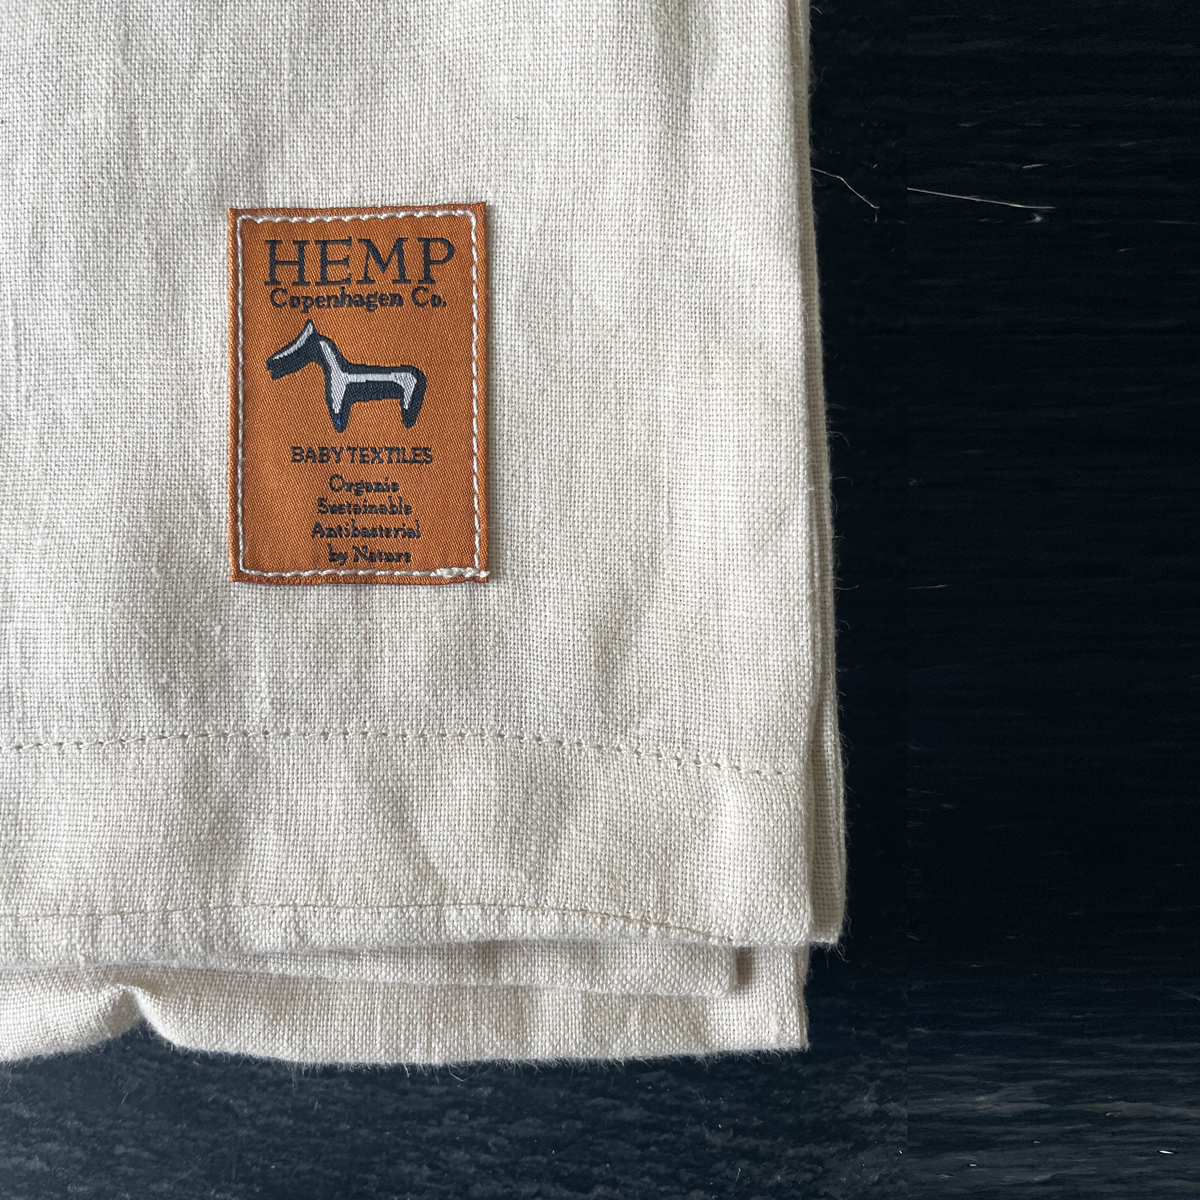 Hemp Copenhagen Co. Bed linen Baby 100% Hemp White or Natural Grey